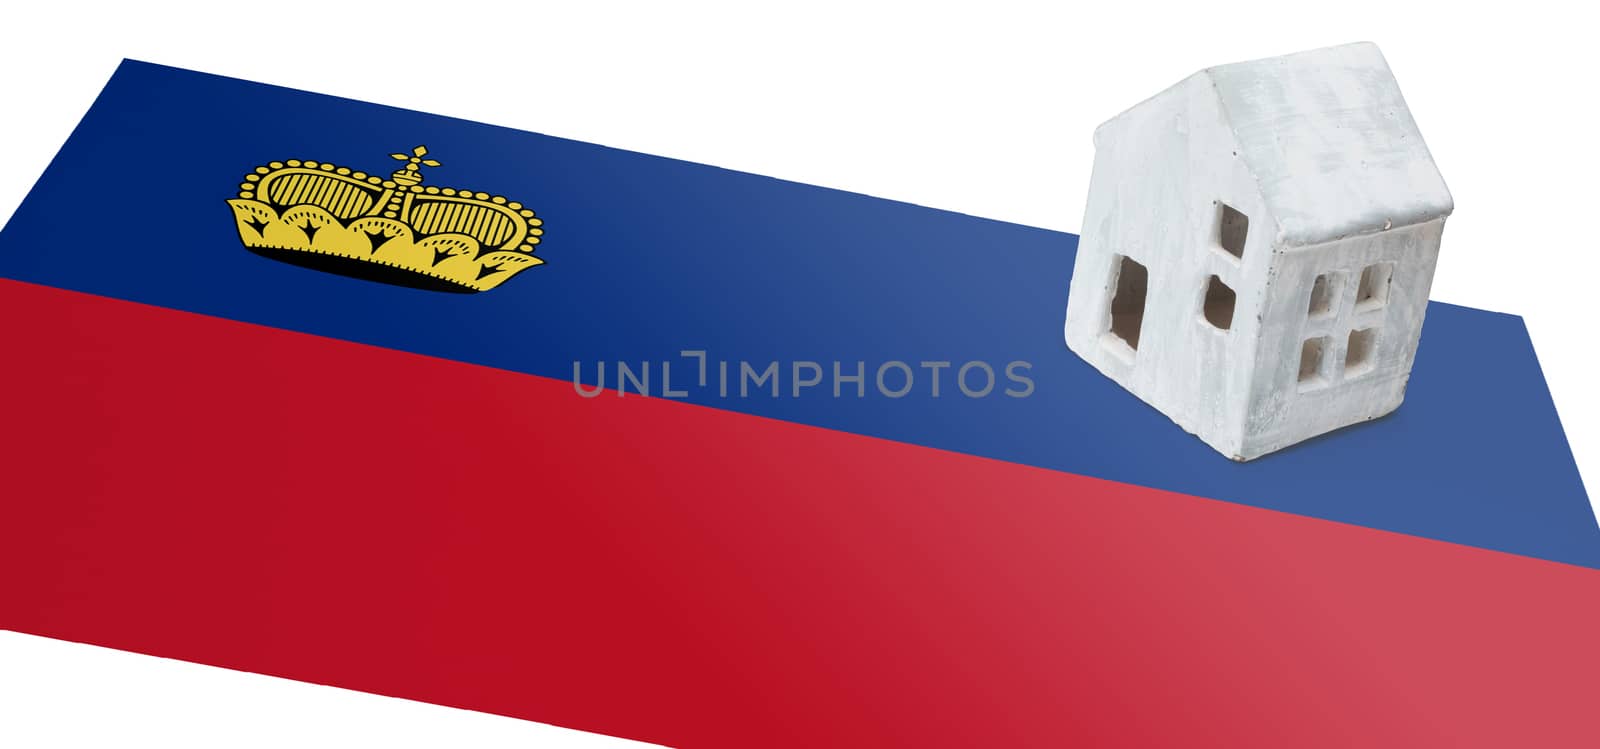 Small house on a flag - Liechtenstein by michaklootwijk